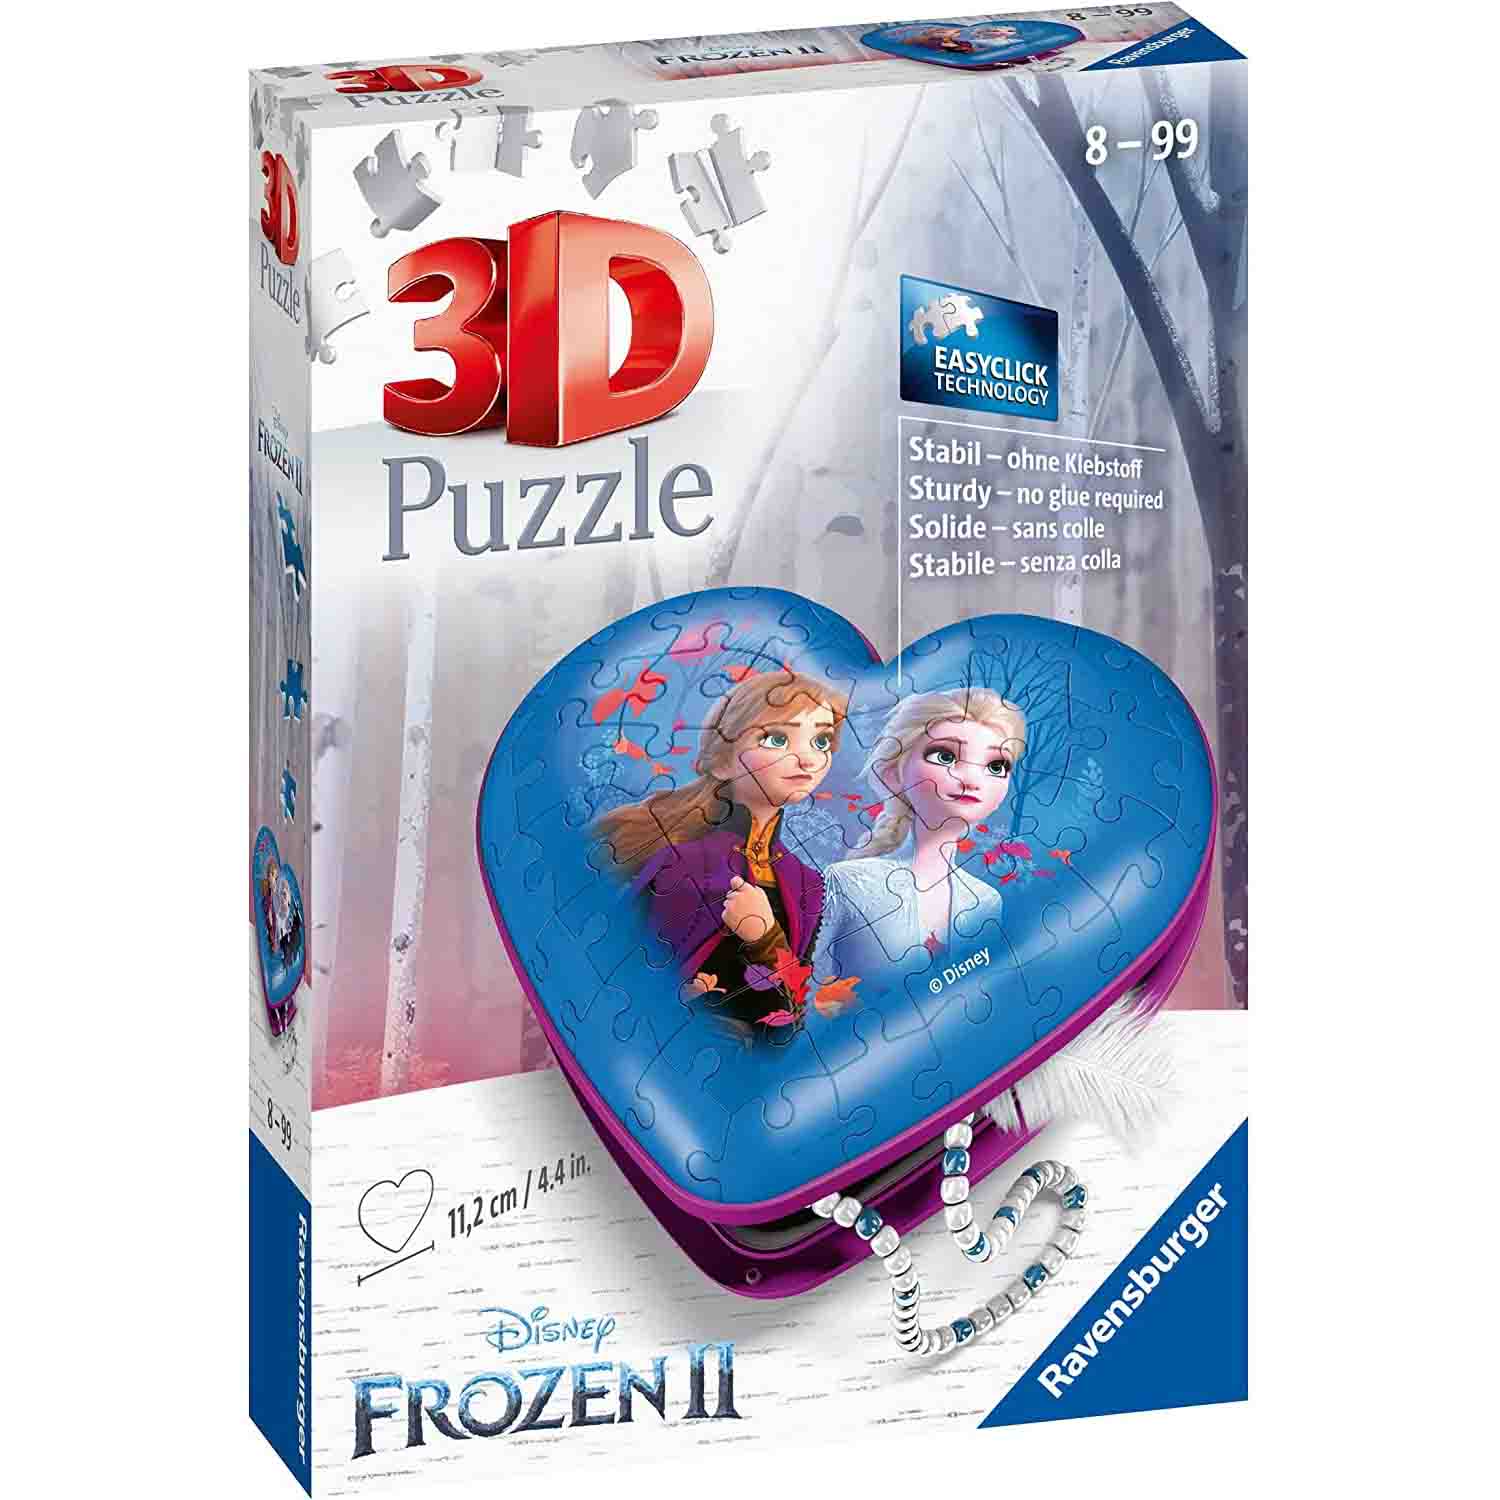 Puzzle cutie in forma de inima Frozen, + 8 ani, 54 piese, Ravensburger